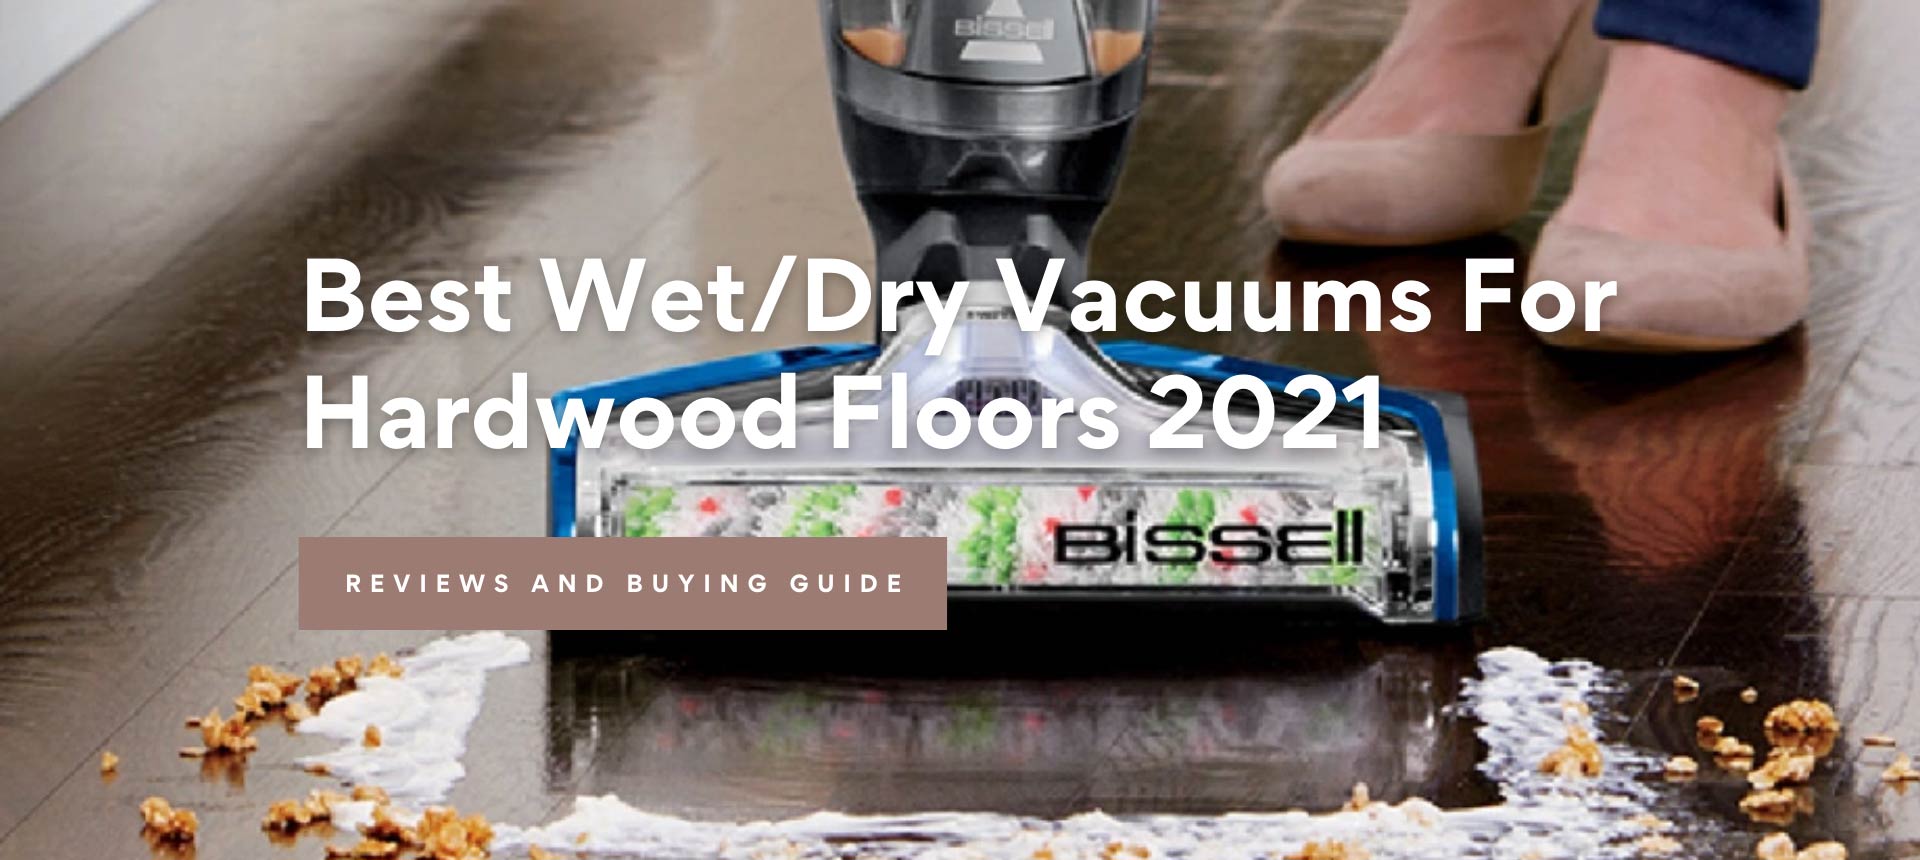 Best Wet/Dry Vacuums For Hardwood Floors 2021